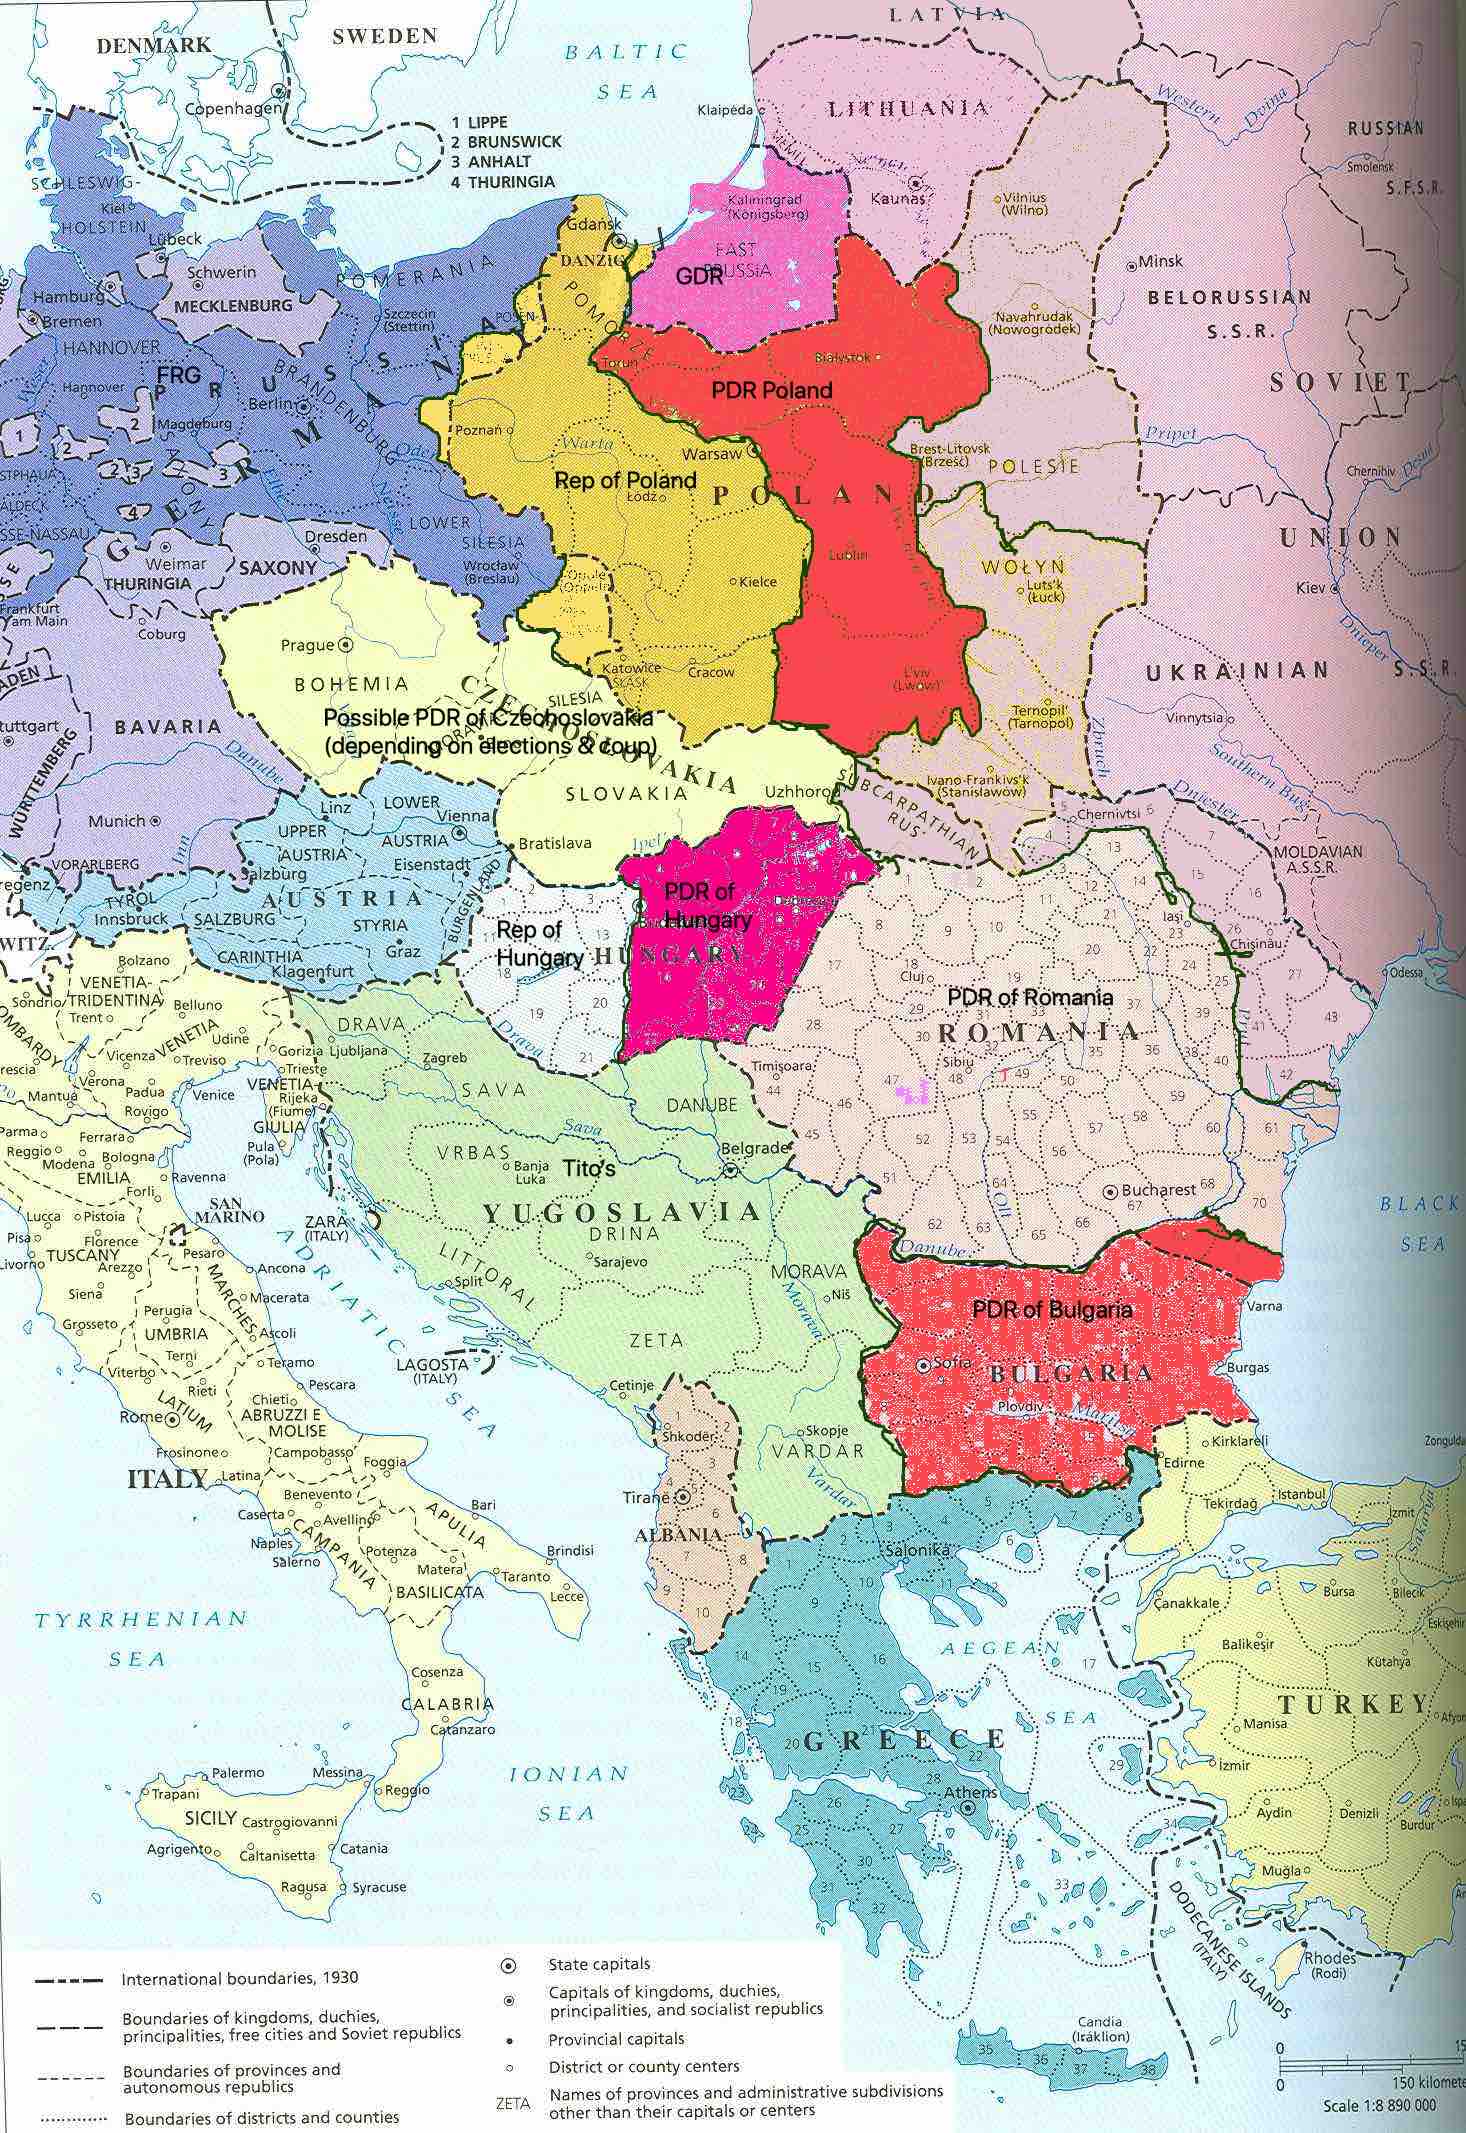 Europe-East-Central-1945 - 7.jpg